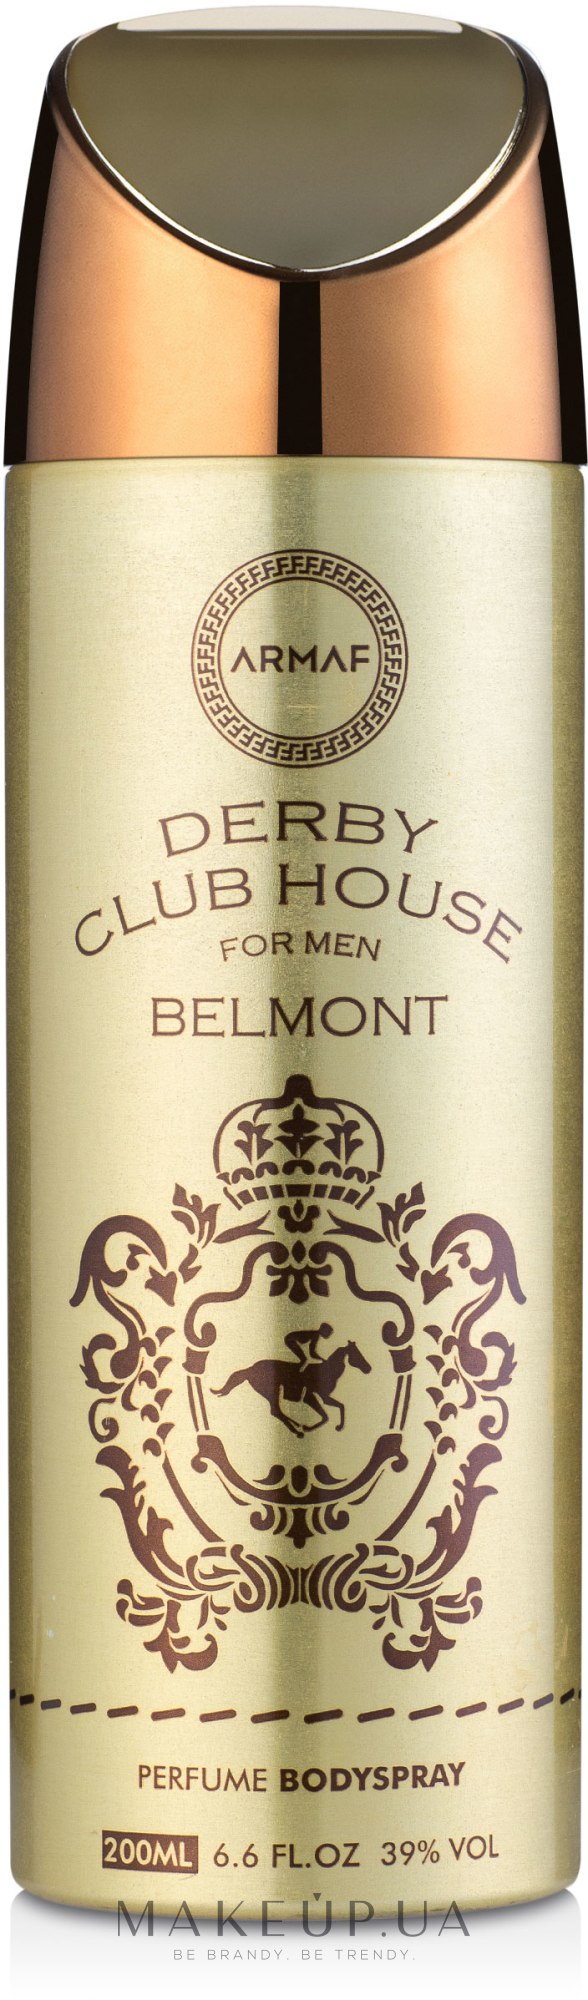 Armaf Derby Club House Belmont - Парфюмированный дезодорант-спрей для тела — фото 200ml